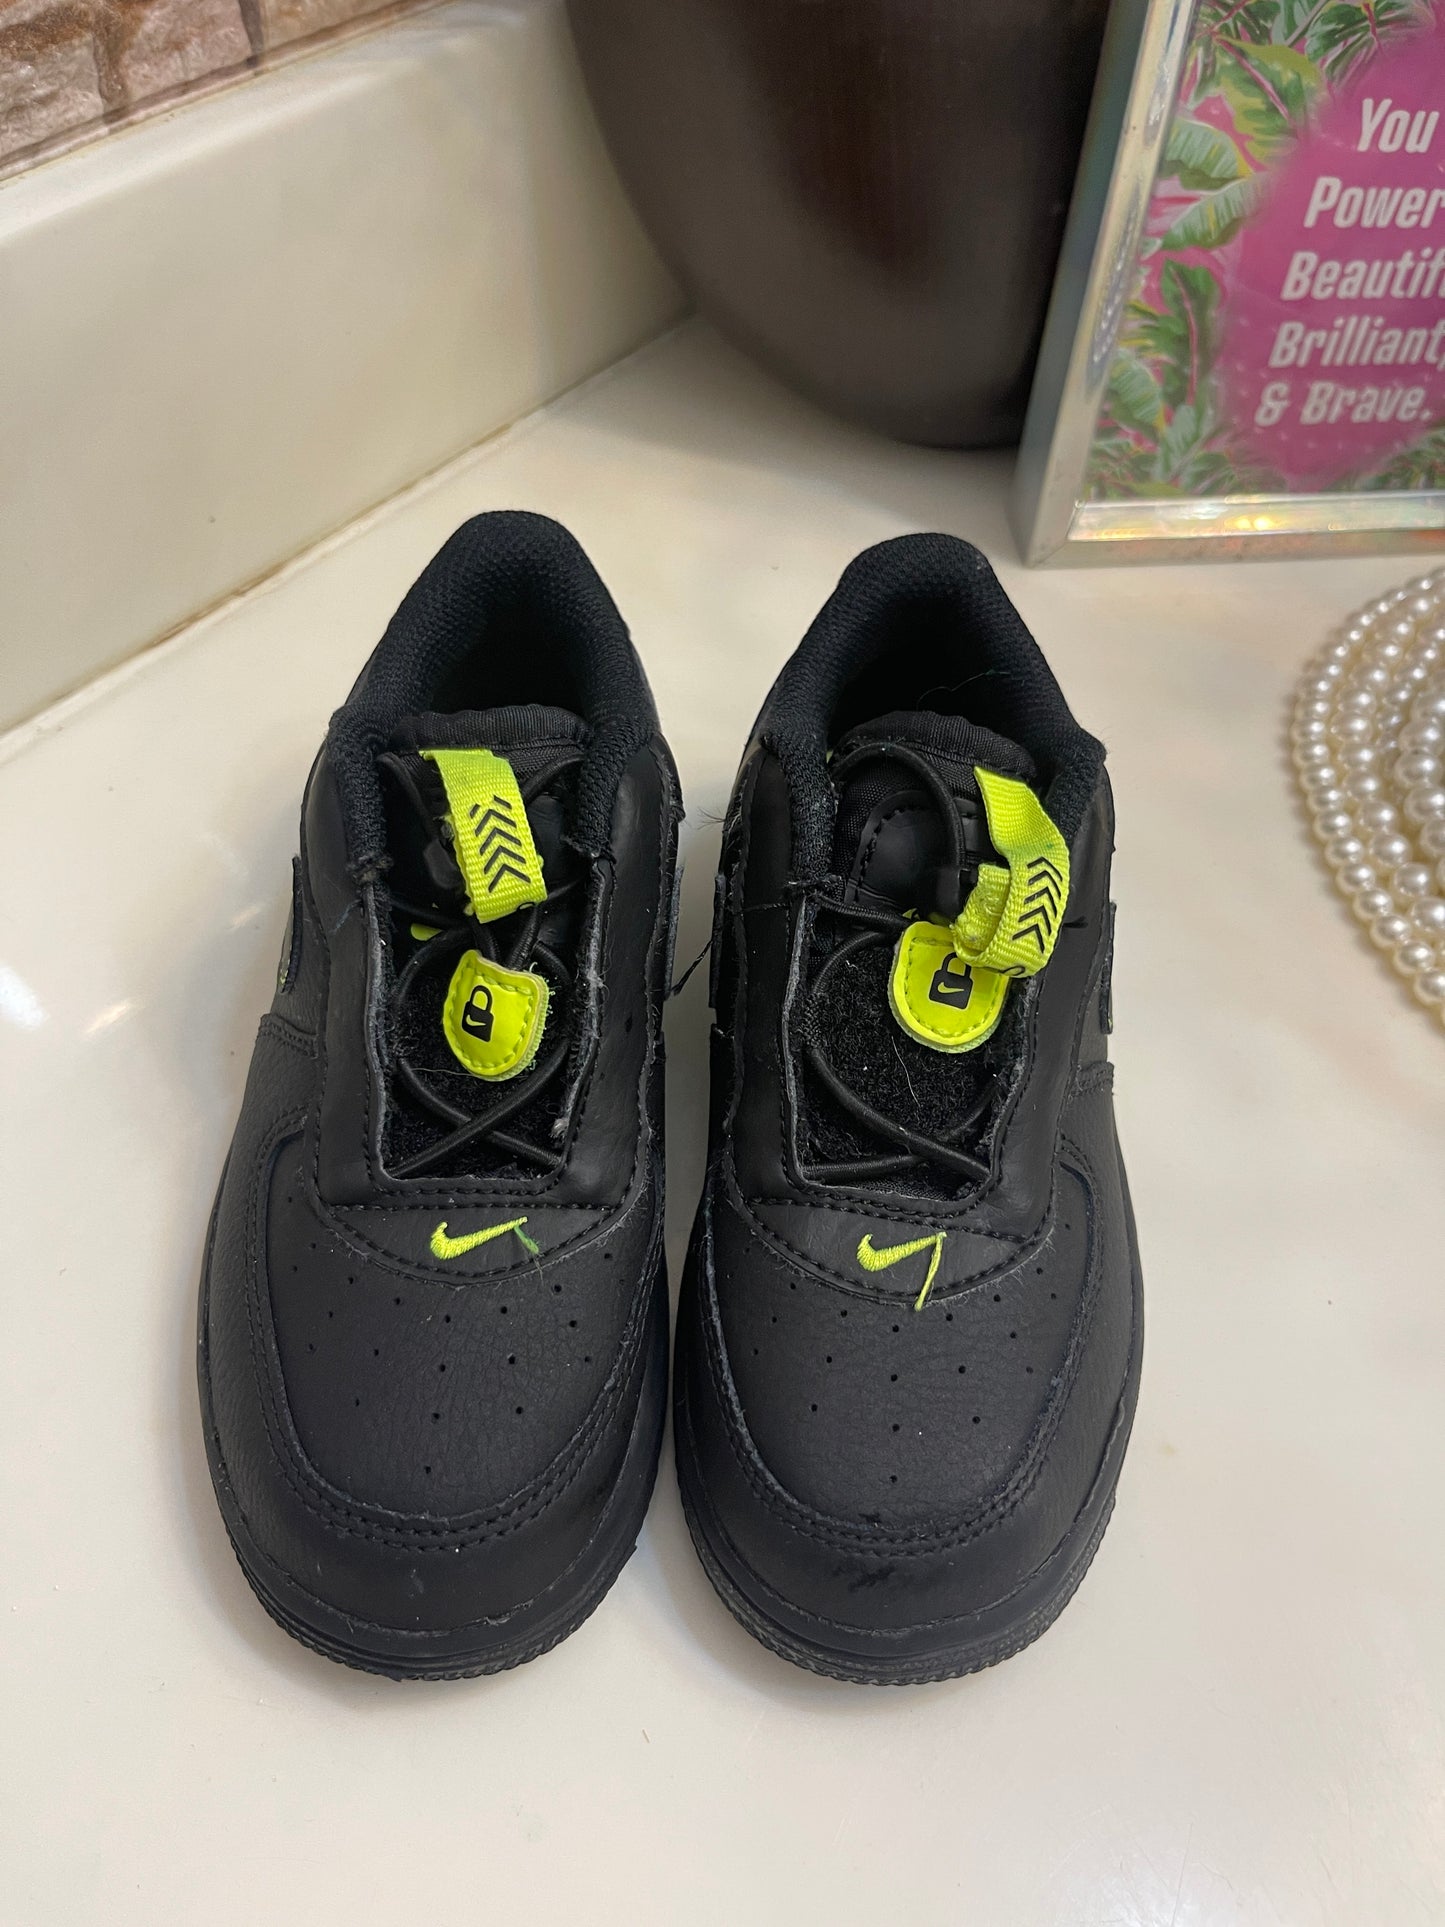 Nike Air forces Black Neon Green boys toddler sz 10c